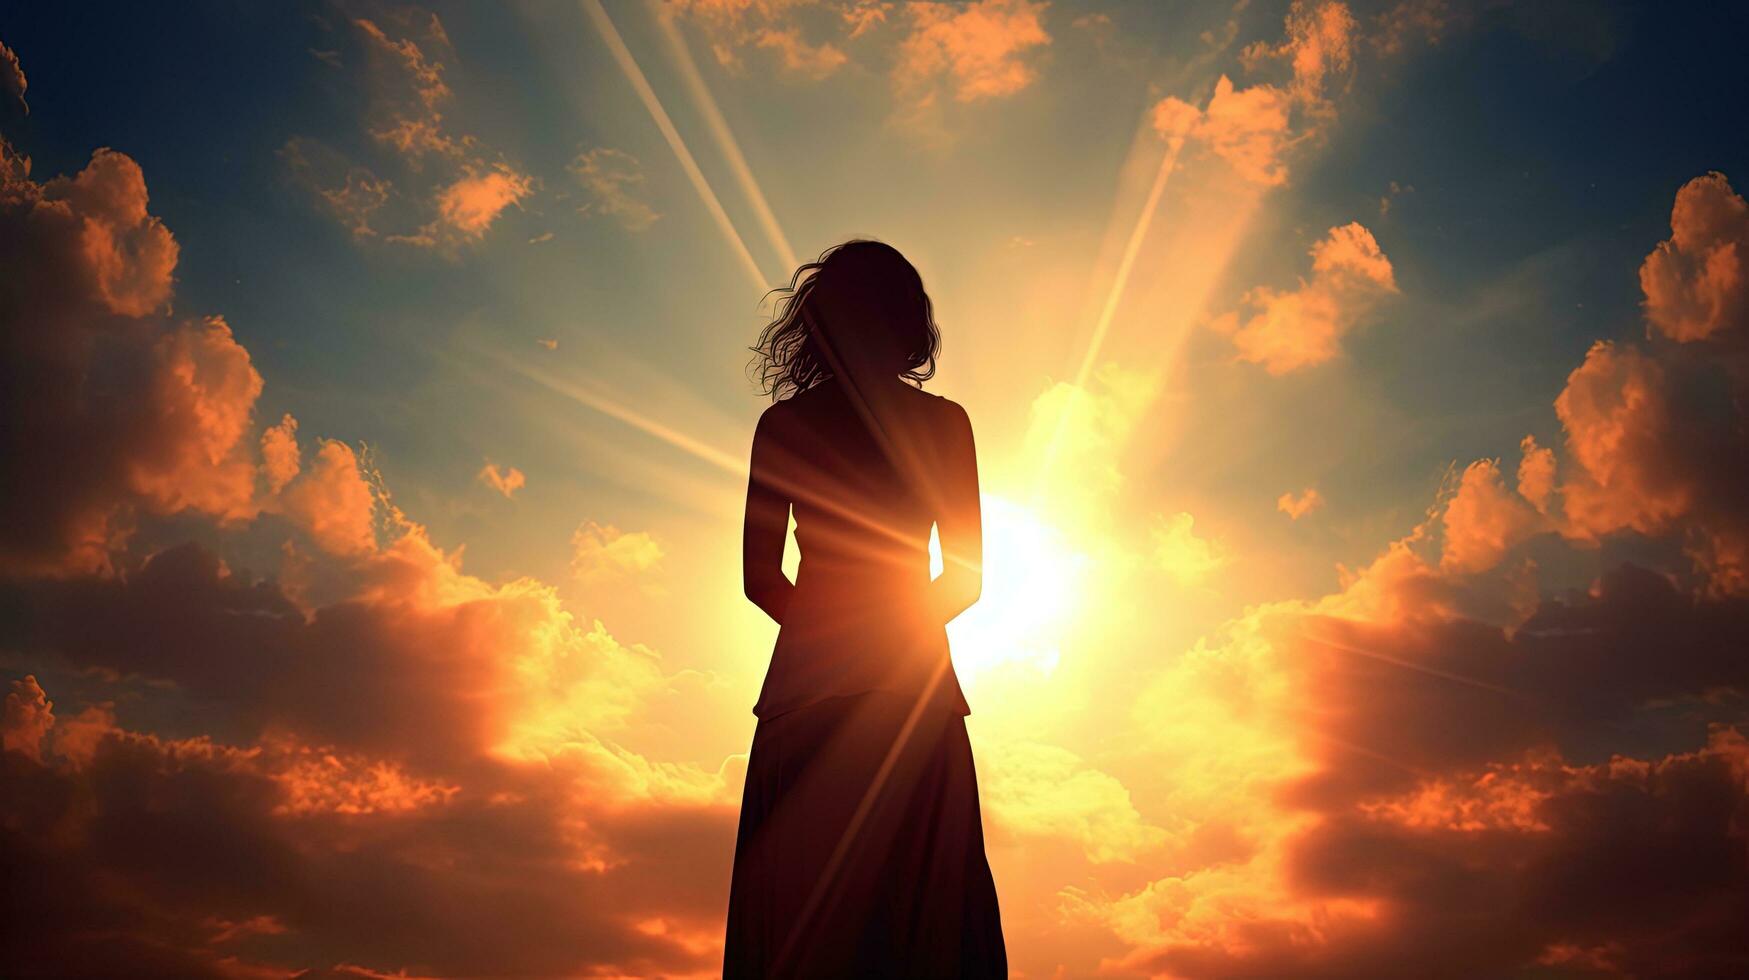 vrouw bidden met lucht achtergrond. silhouet concept foto